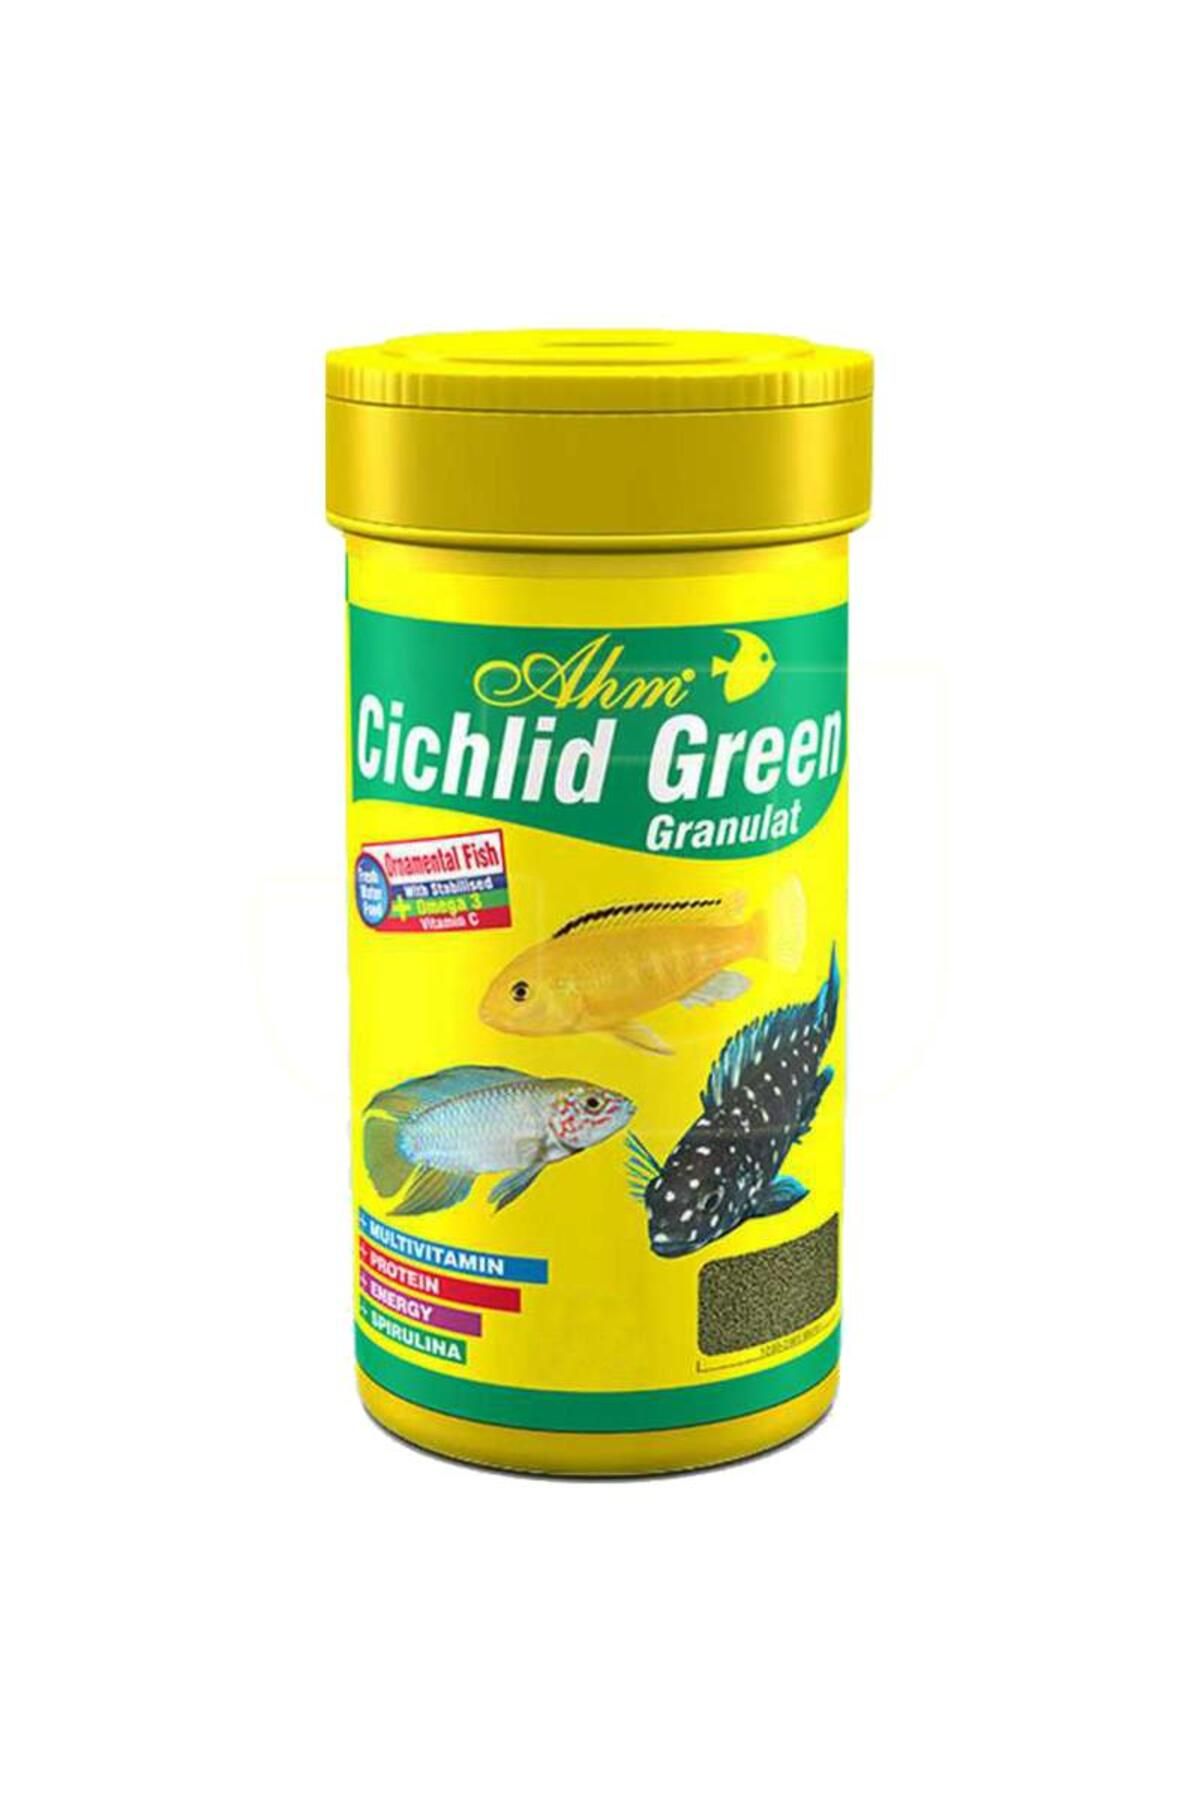 Amore Cichlid Mix Granules 1000ml, Ahm Cichlid Green Granulat 250ml Akvaryum Balik Yemi